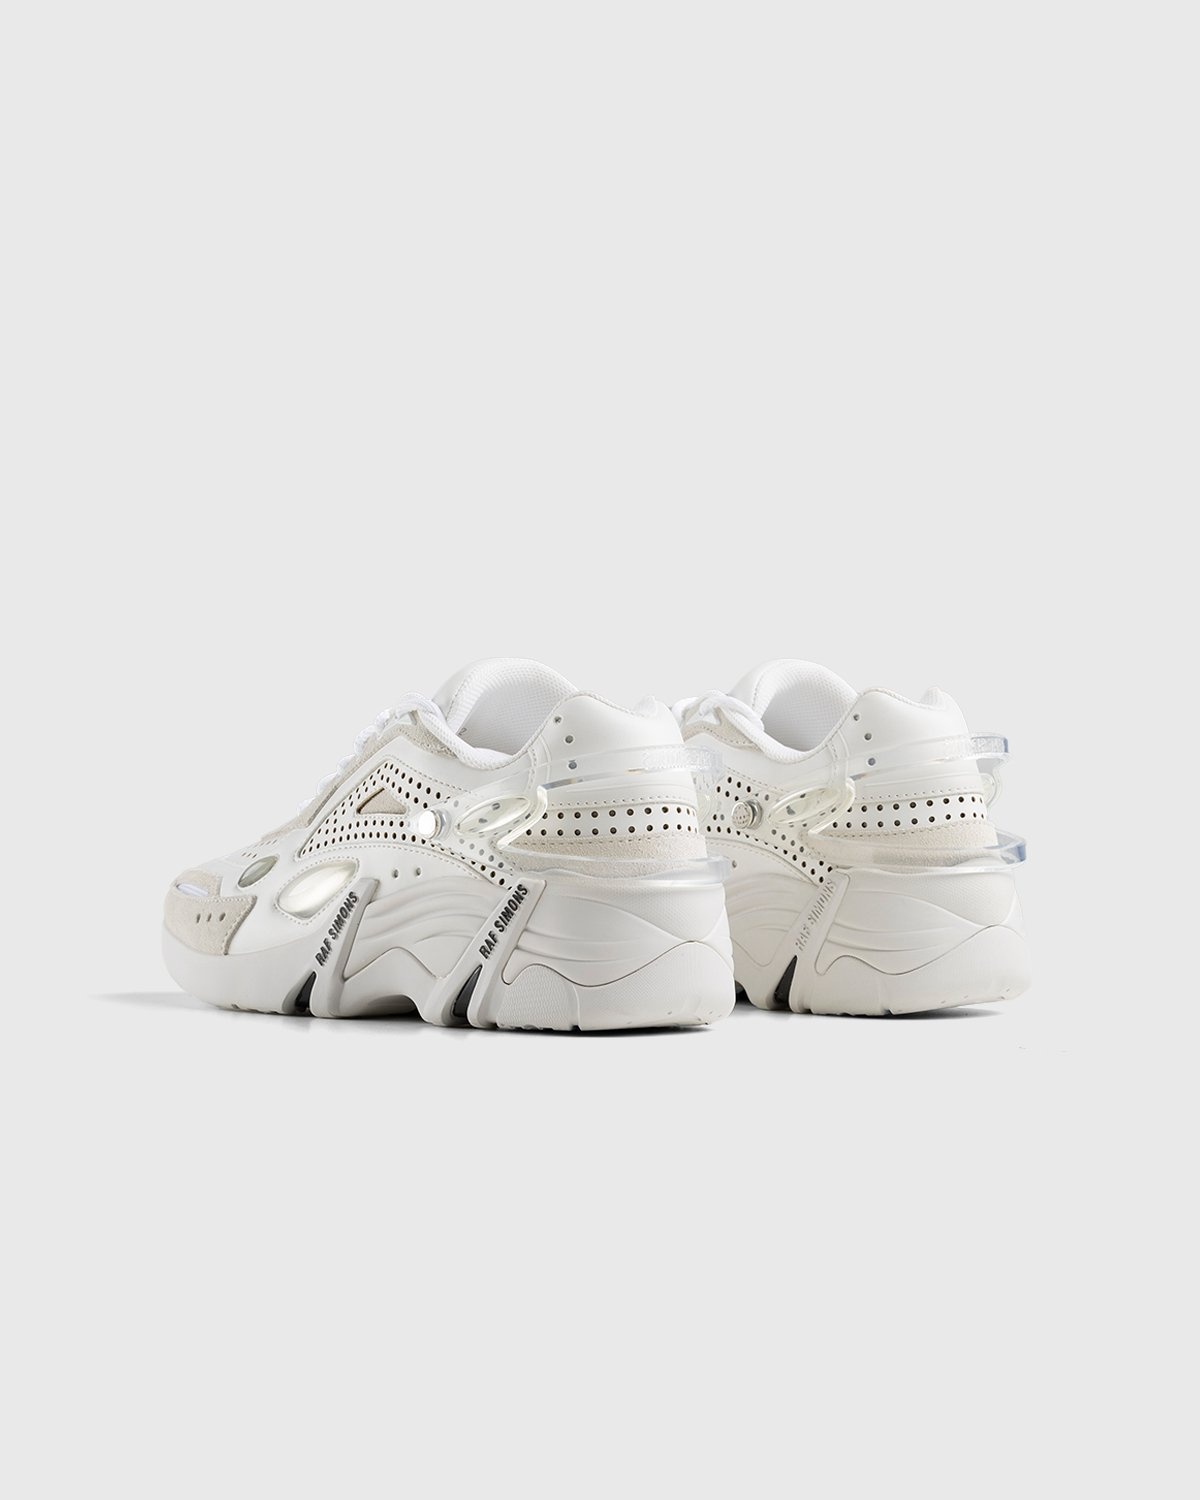 Raf Simons – Cylon 21 White - Low Top Sneakers - White - Image 4